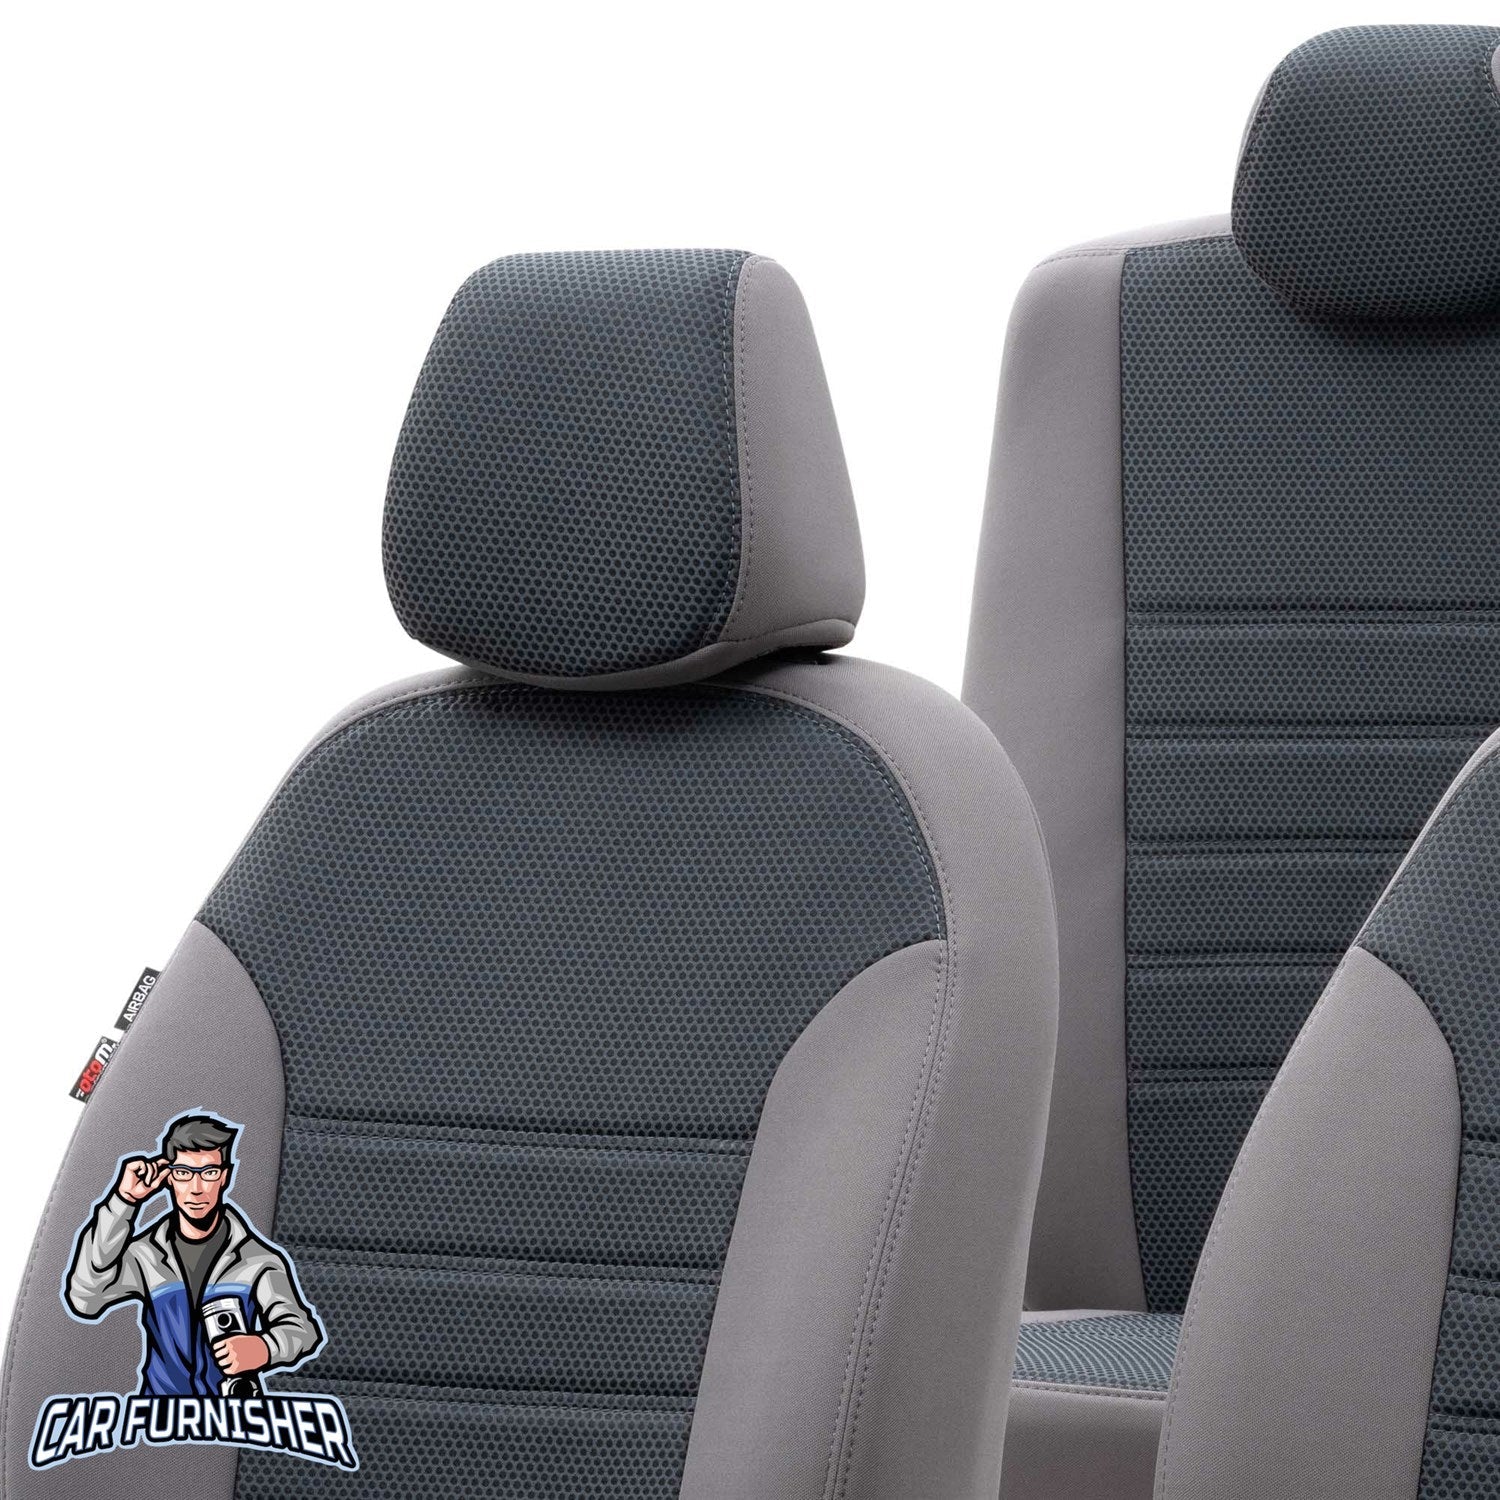 Toyota Aygo Seat Cover Original Jacquard Design Smoked Jacquard Fabric